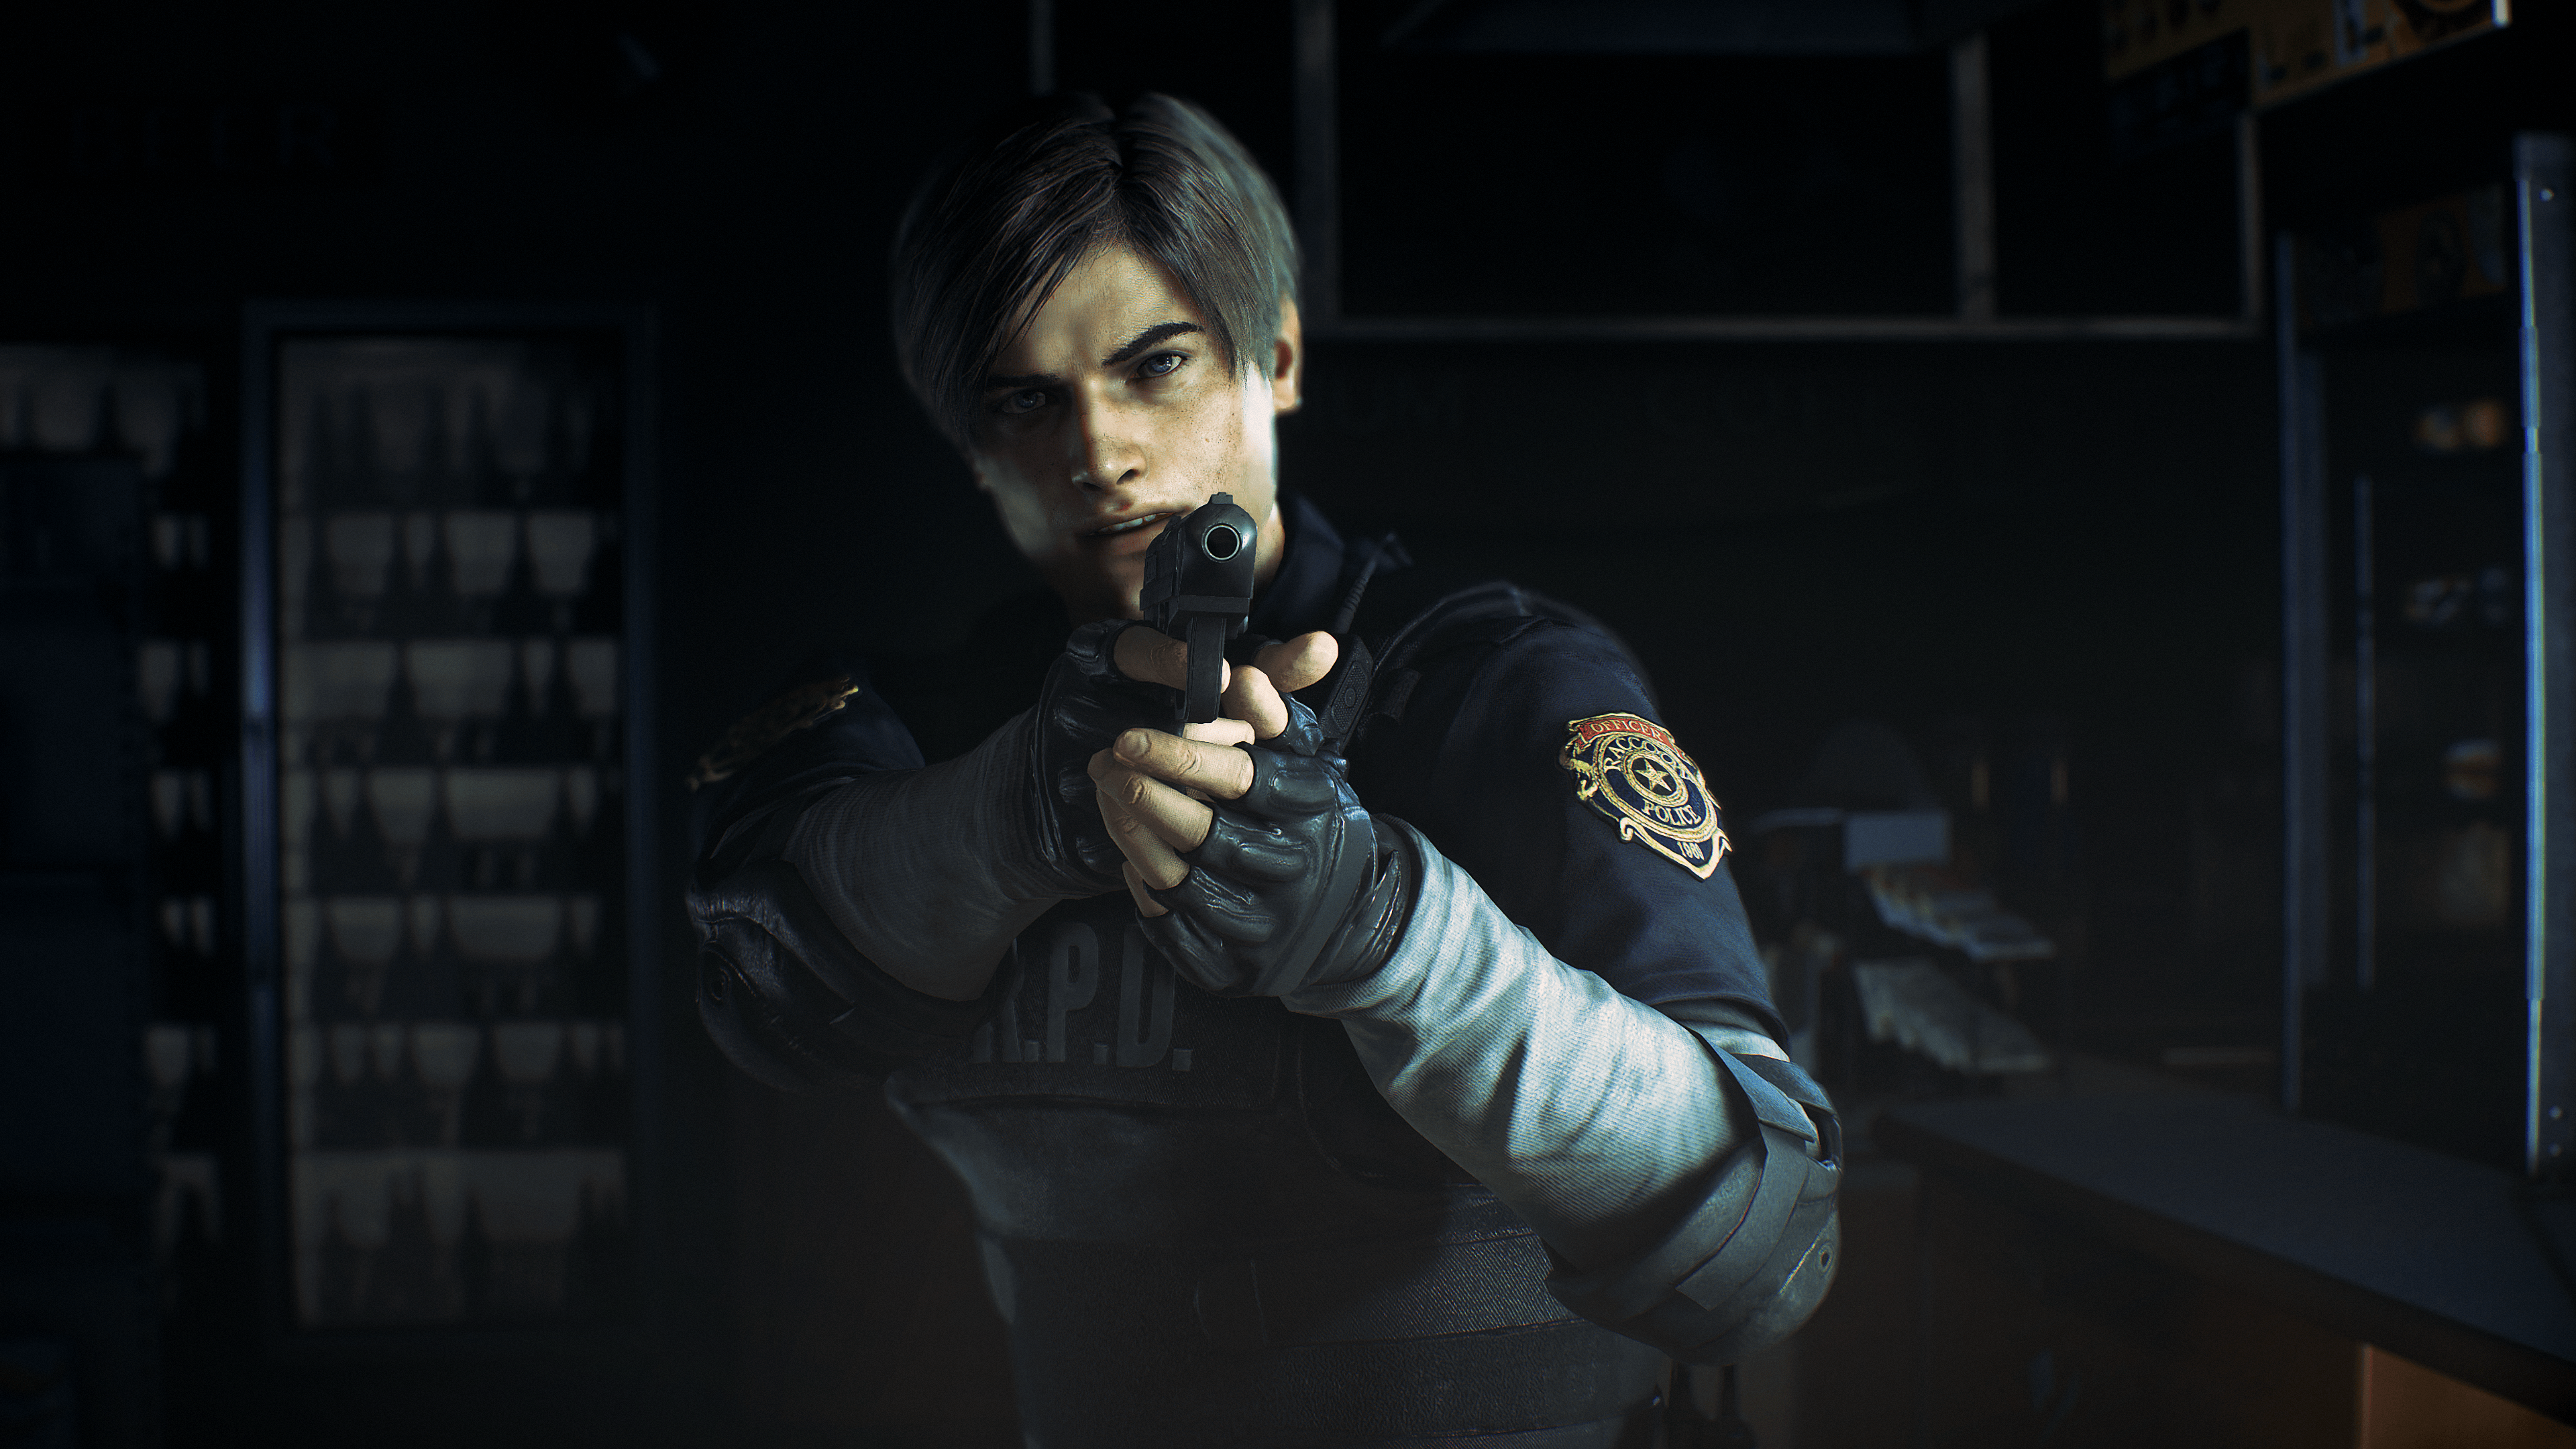 Resident Evil 2 (2019) Leon S. Kennedy 4k Ultra HD Wallpaper